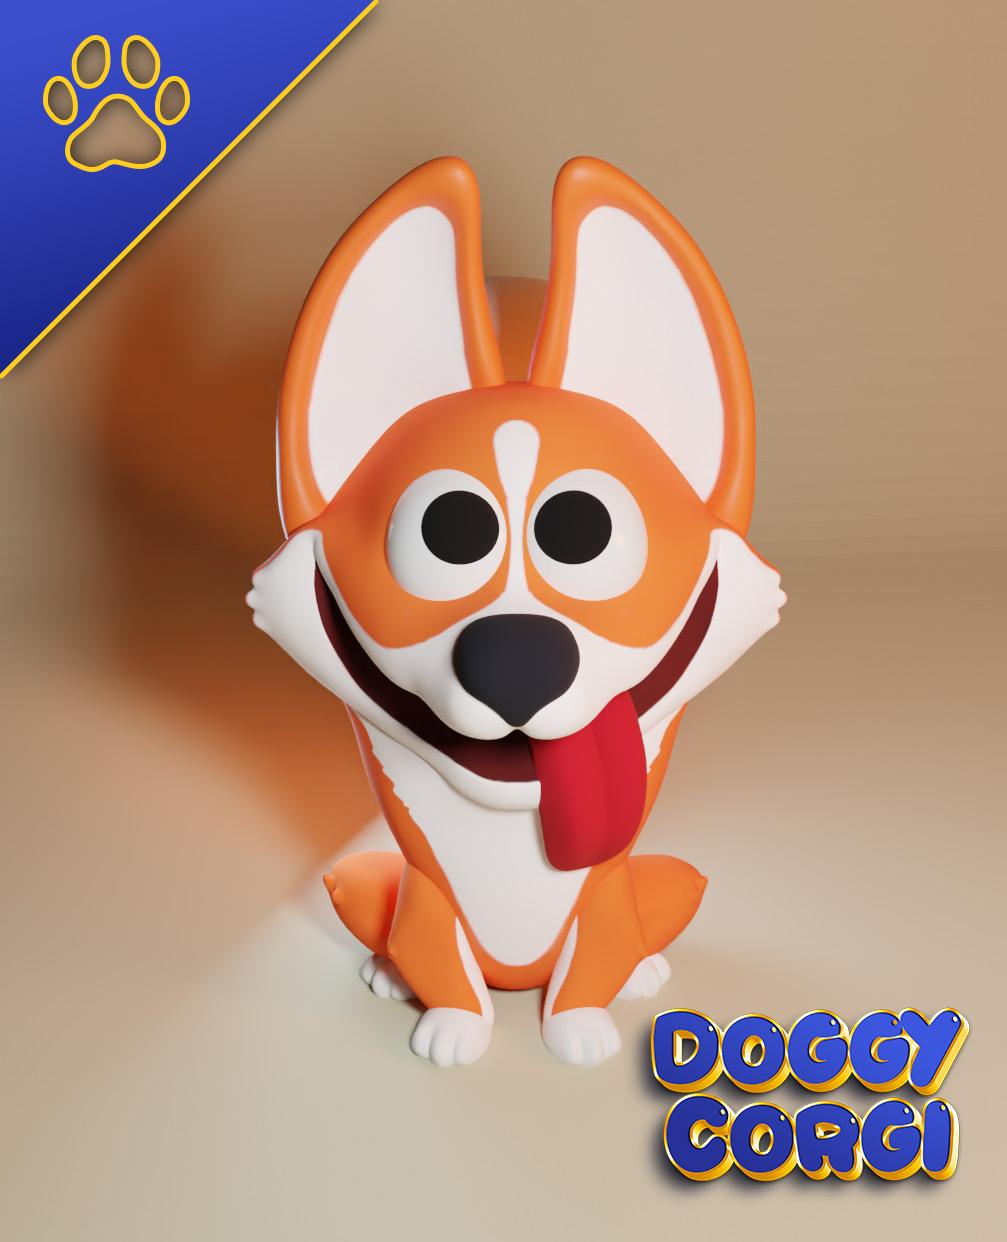 Doggy Corgi 3d model